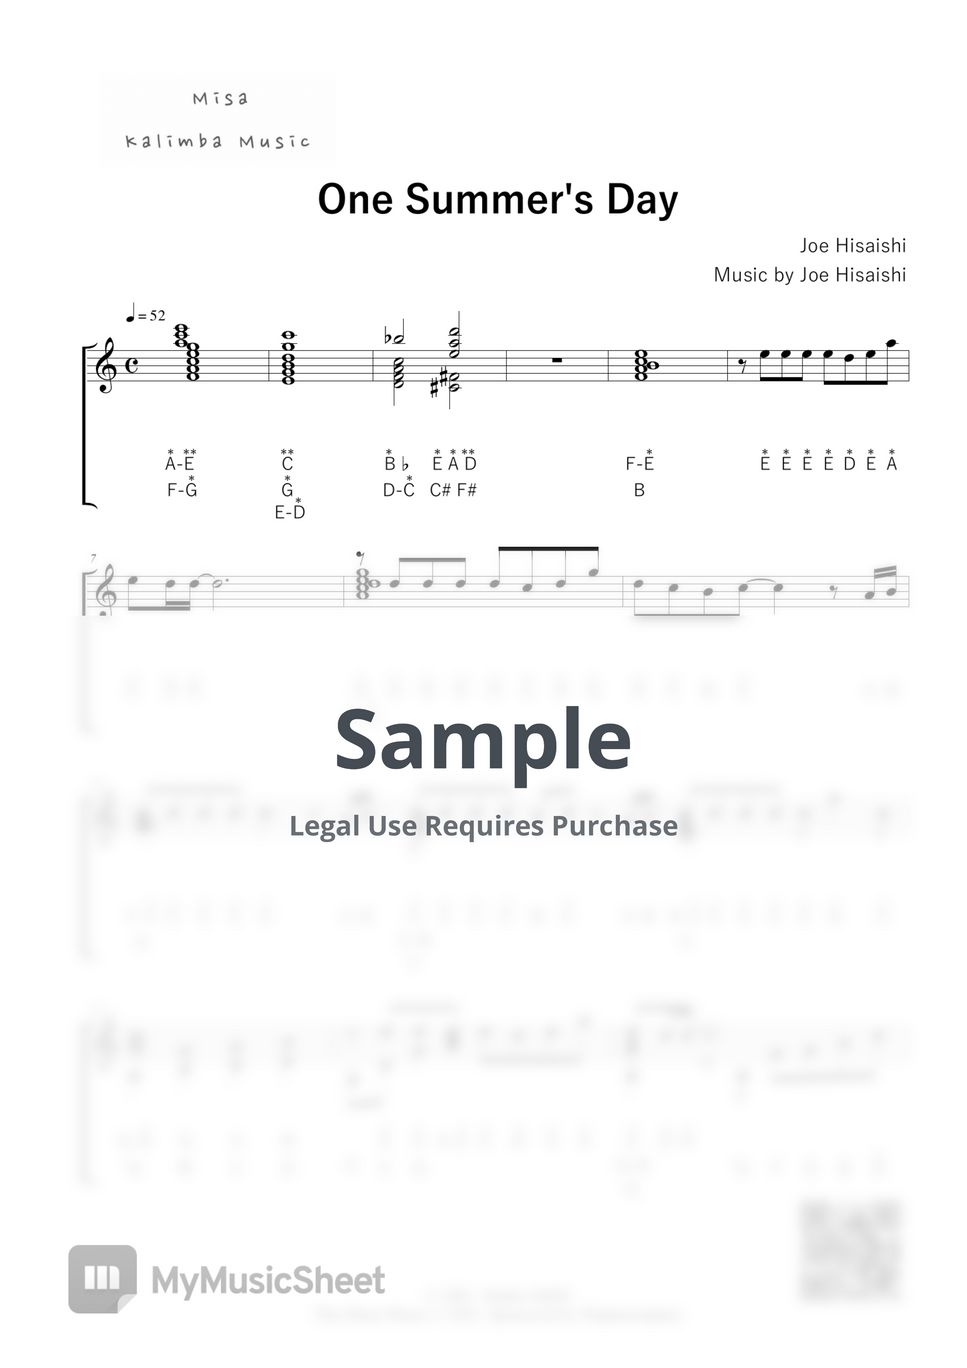 Joe Hisaishi - One Summer's Day / 34 keys kalimba / Letter Notation by Misa / Kalimba Music